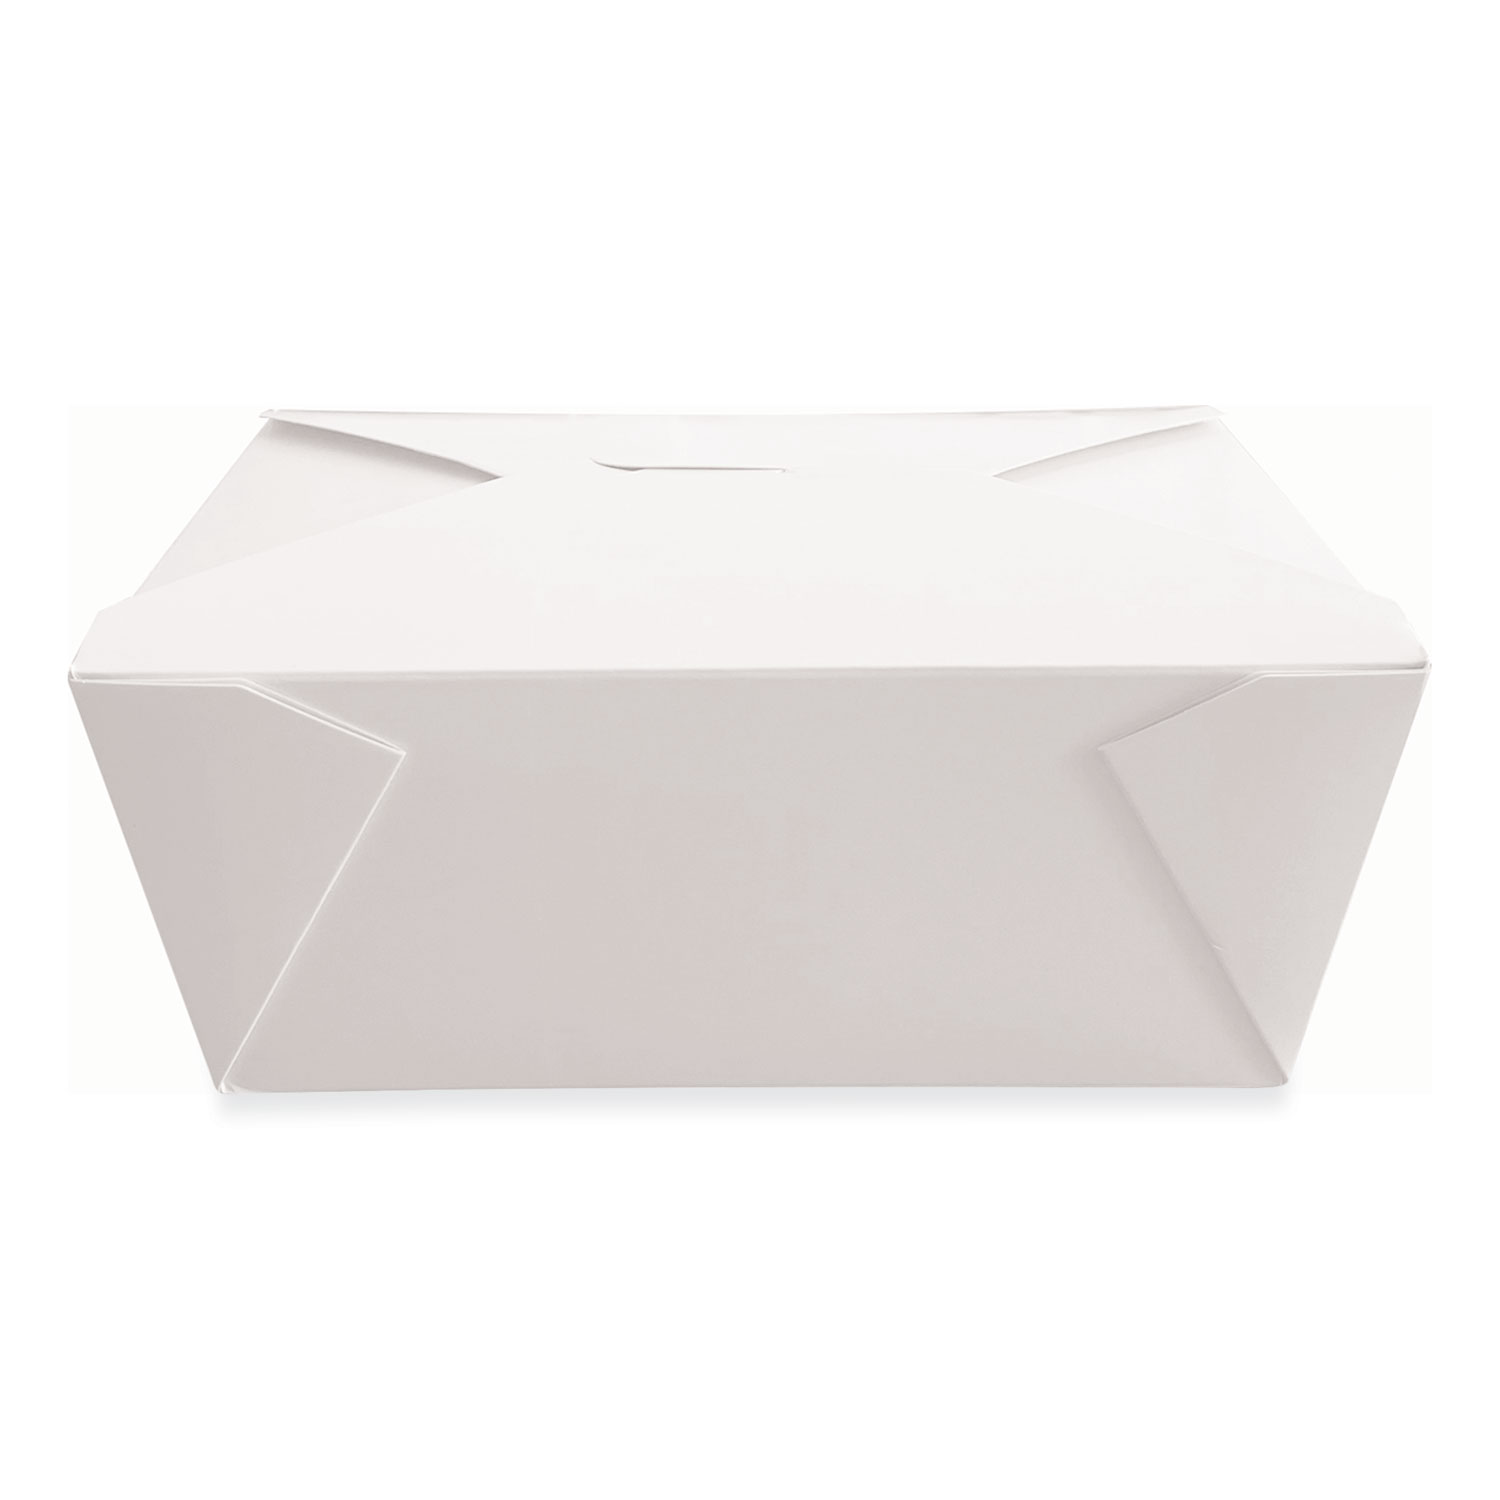  Dura TTGCW4 Takeout Containers, 7.87 x 5.51 x 3.54, White, 160/Carton (MBATTGCW4) 